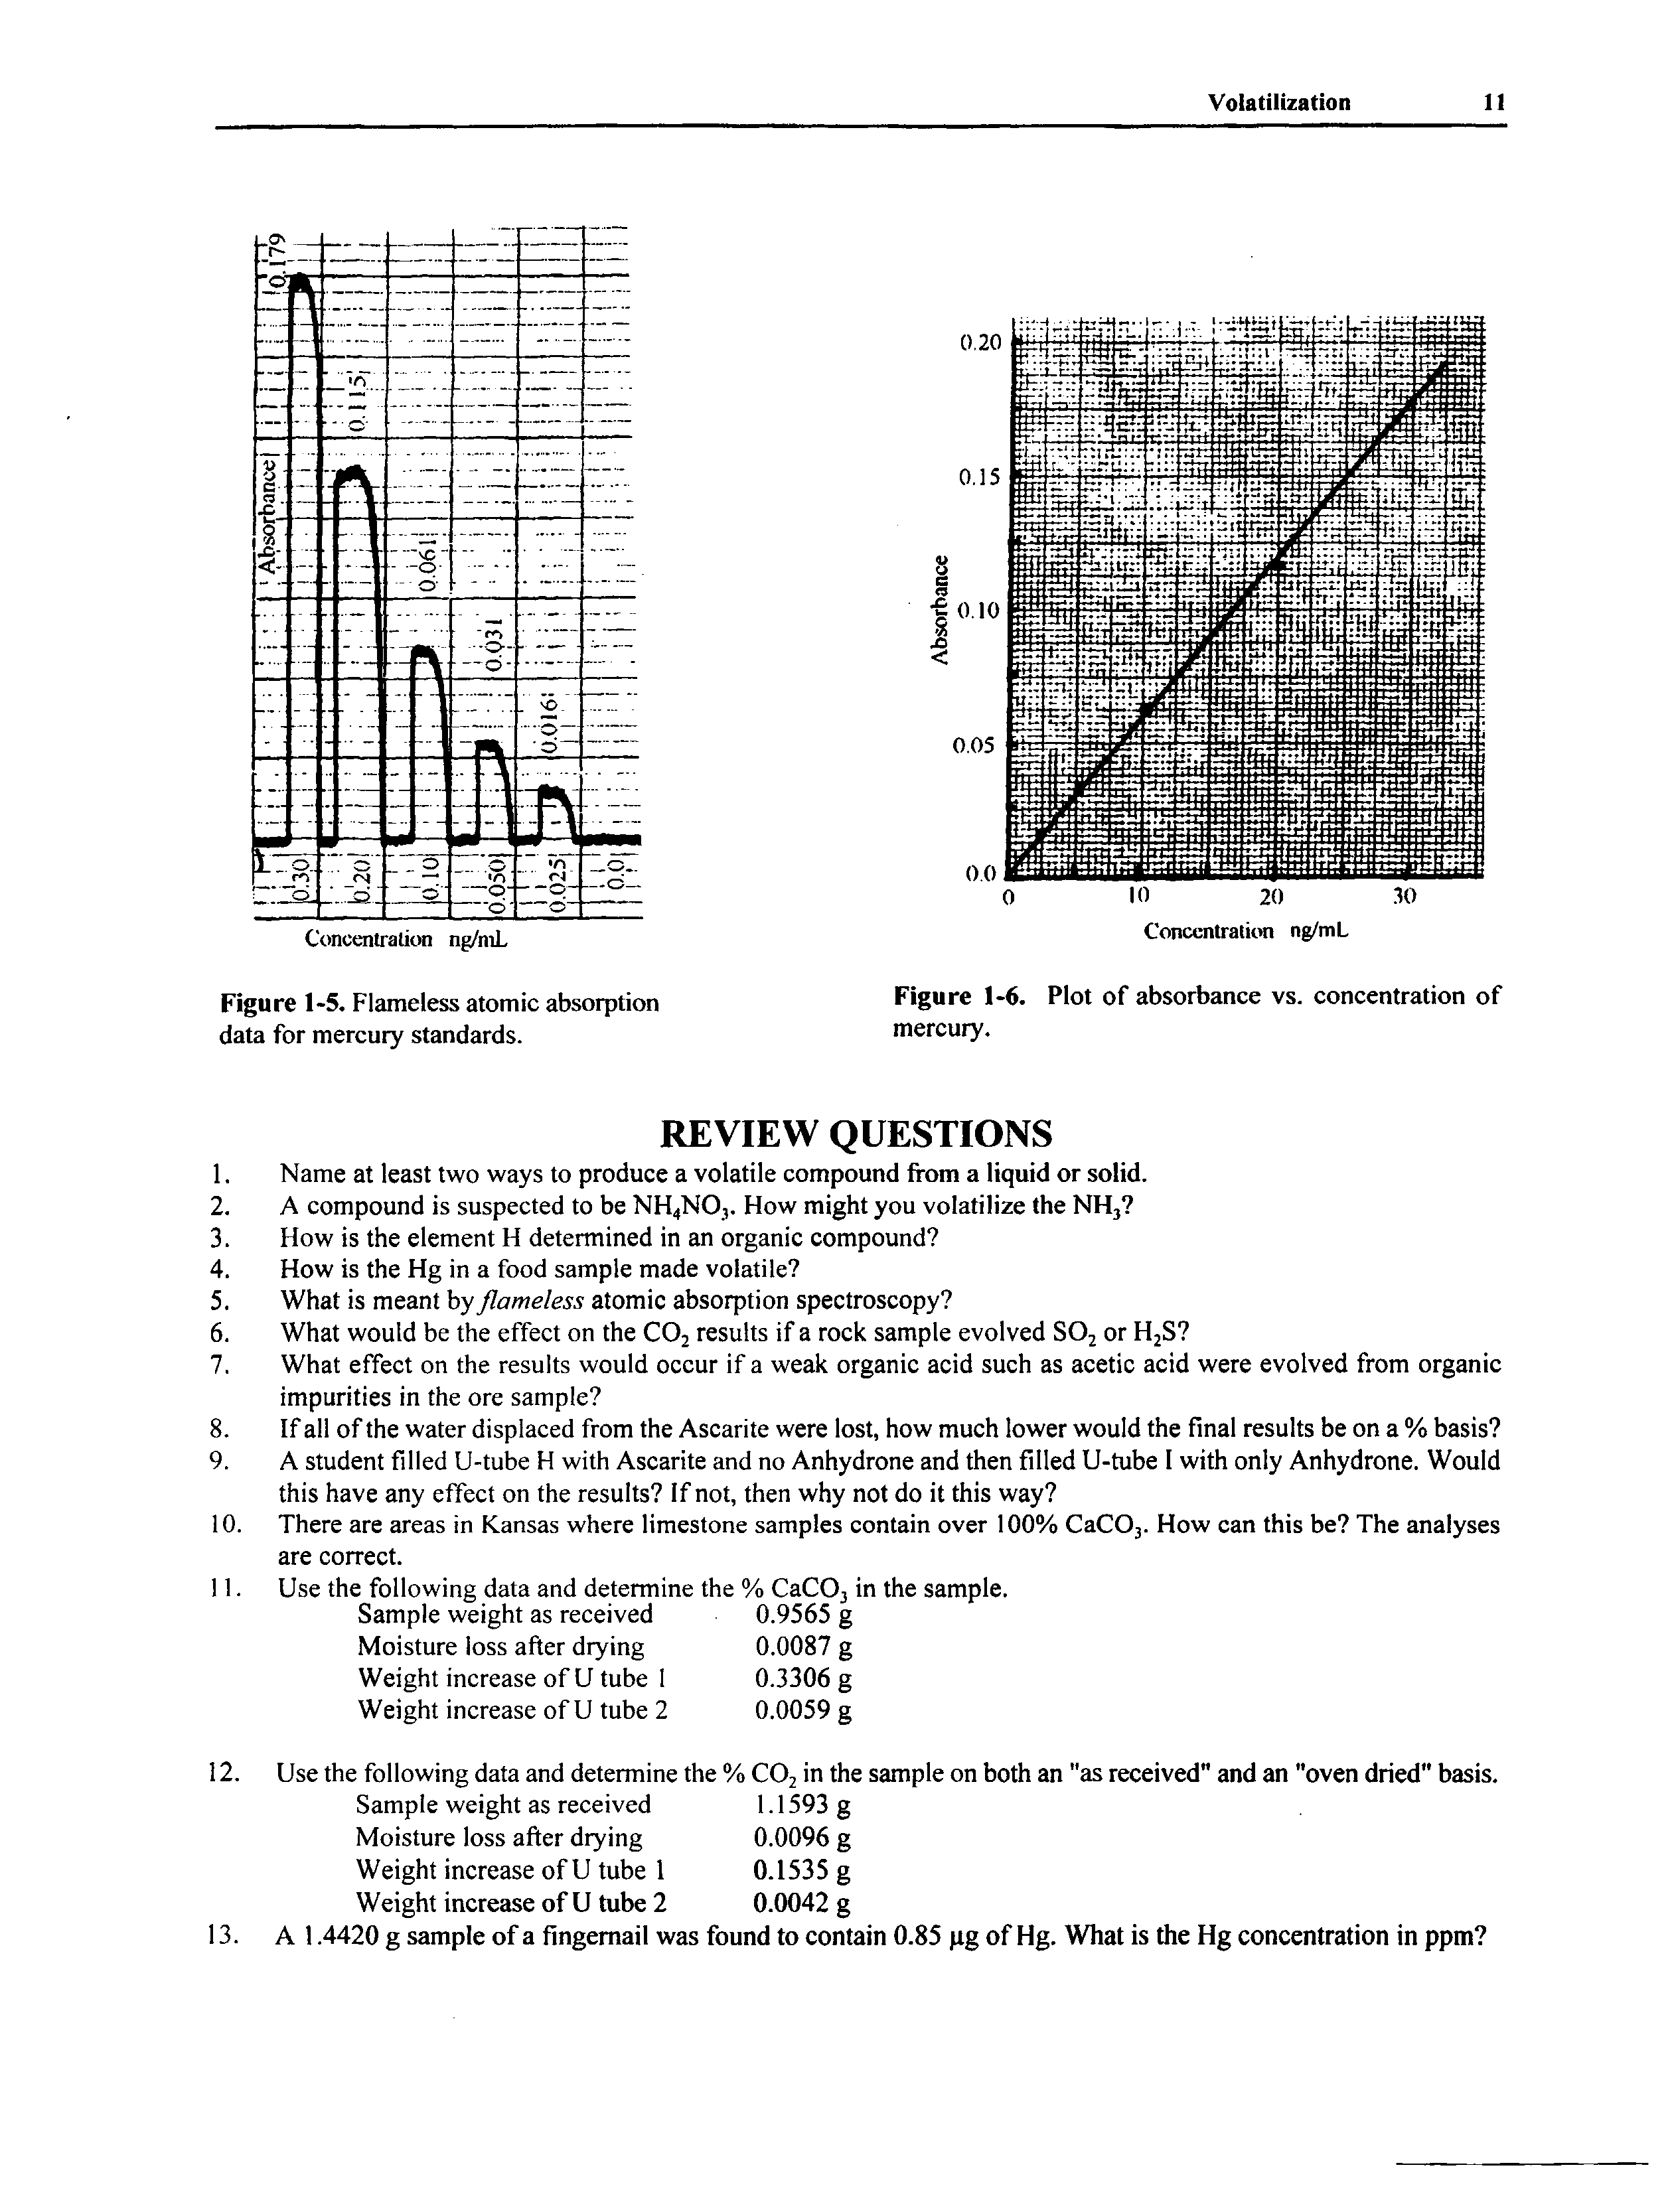 Figure 1-5. Flameless atomic absorption data for mercury standards.